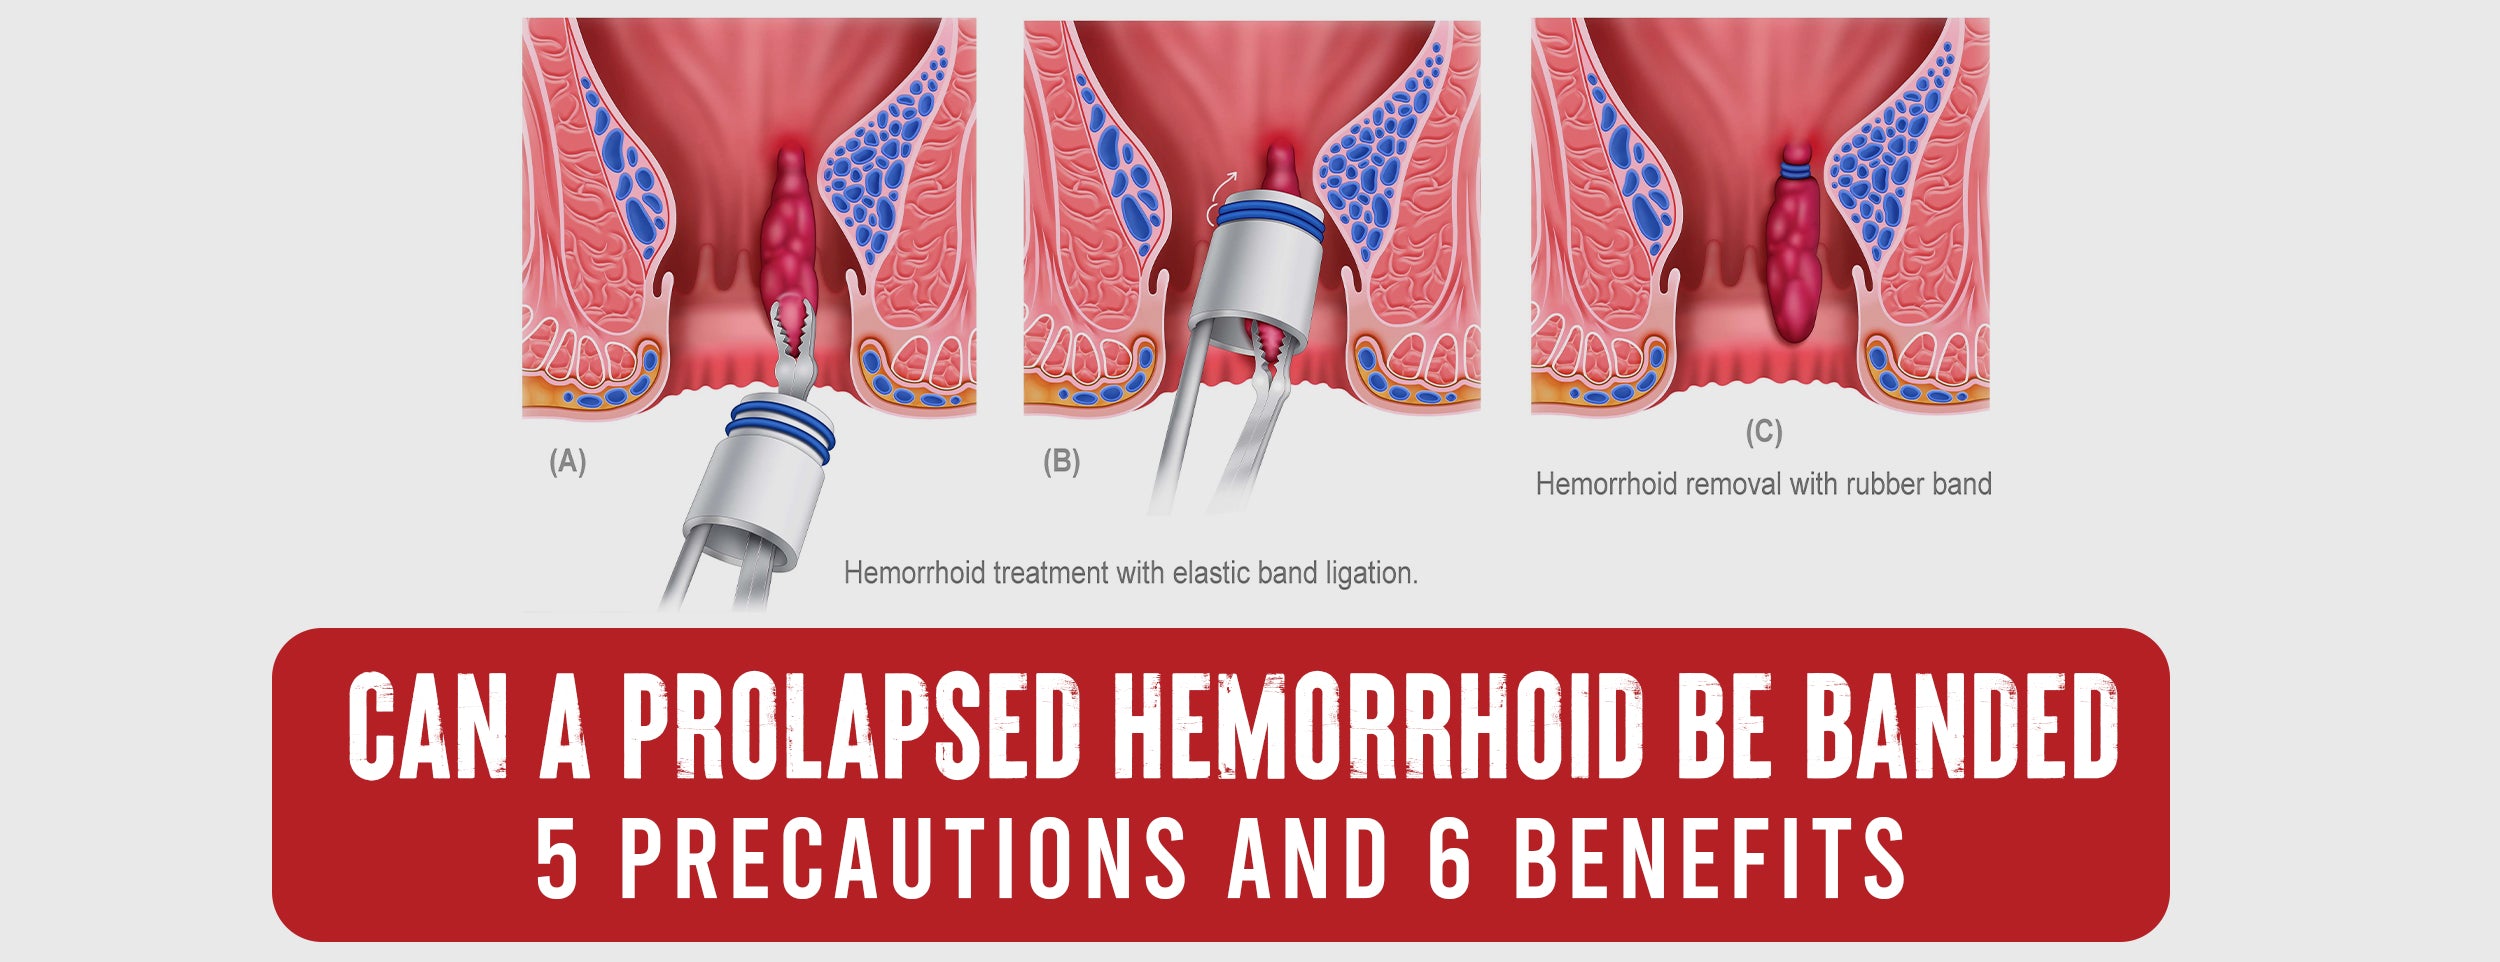 6 Benefits & 5 Precautions of Banding Prolapsed Hemorrhoids